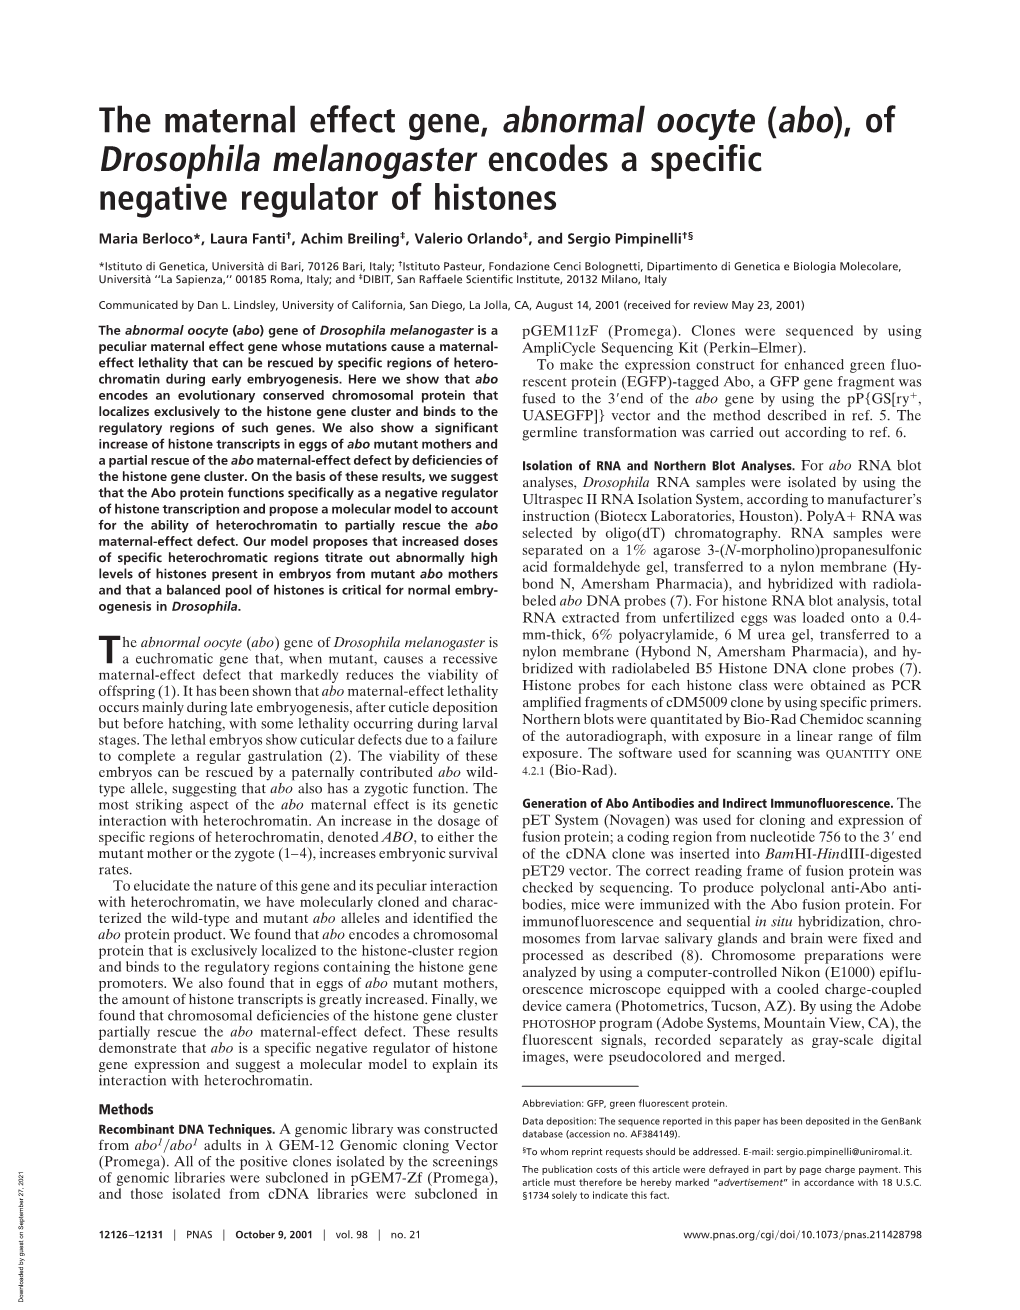 The Maternal Effect Gene, Abnormal Oocyte (Abo), of Drosophila Melanogaster Encodes a Specific Negative Regulator of Histones